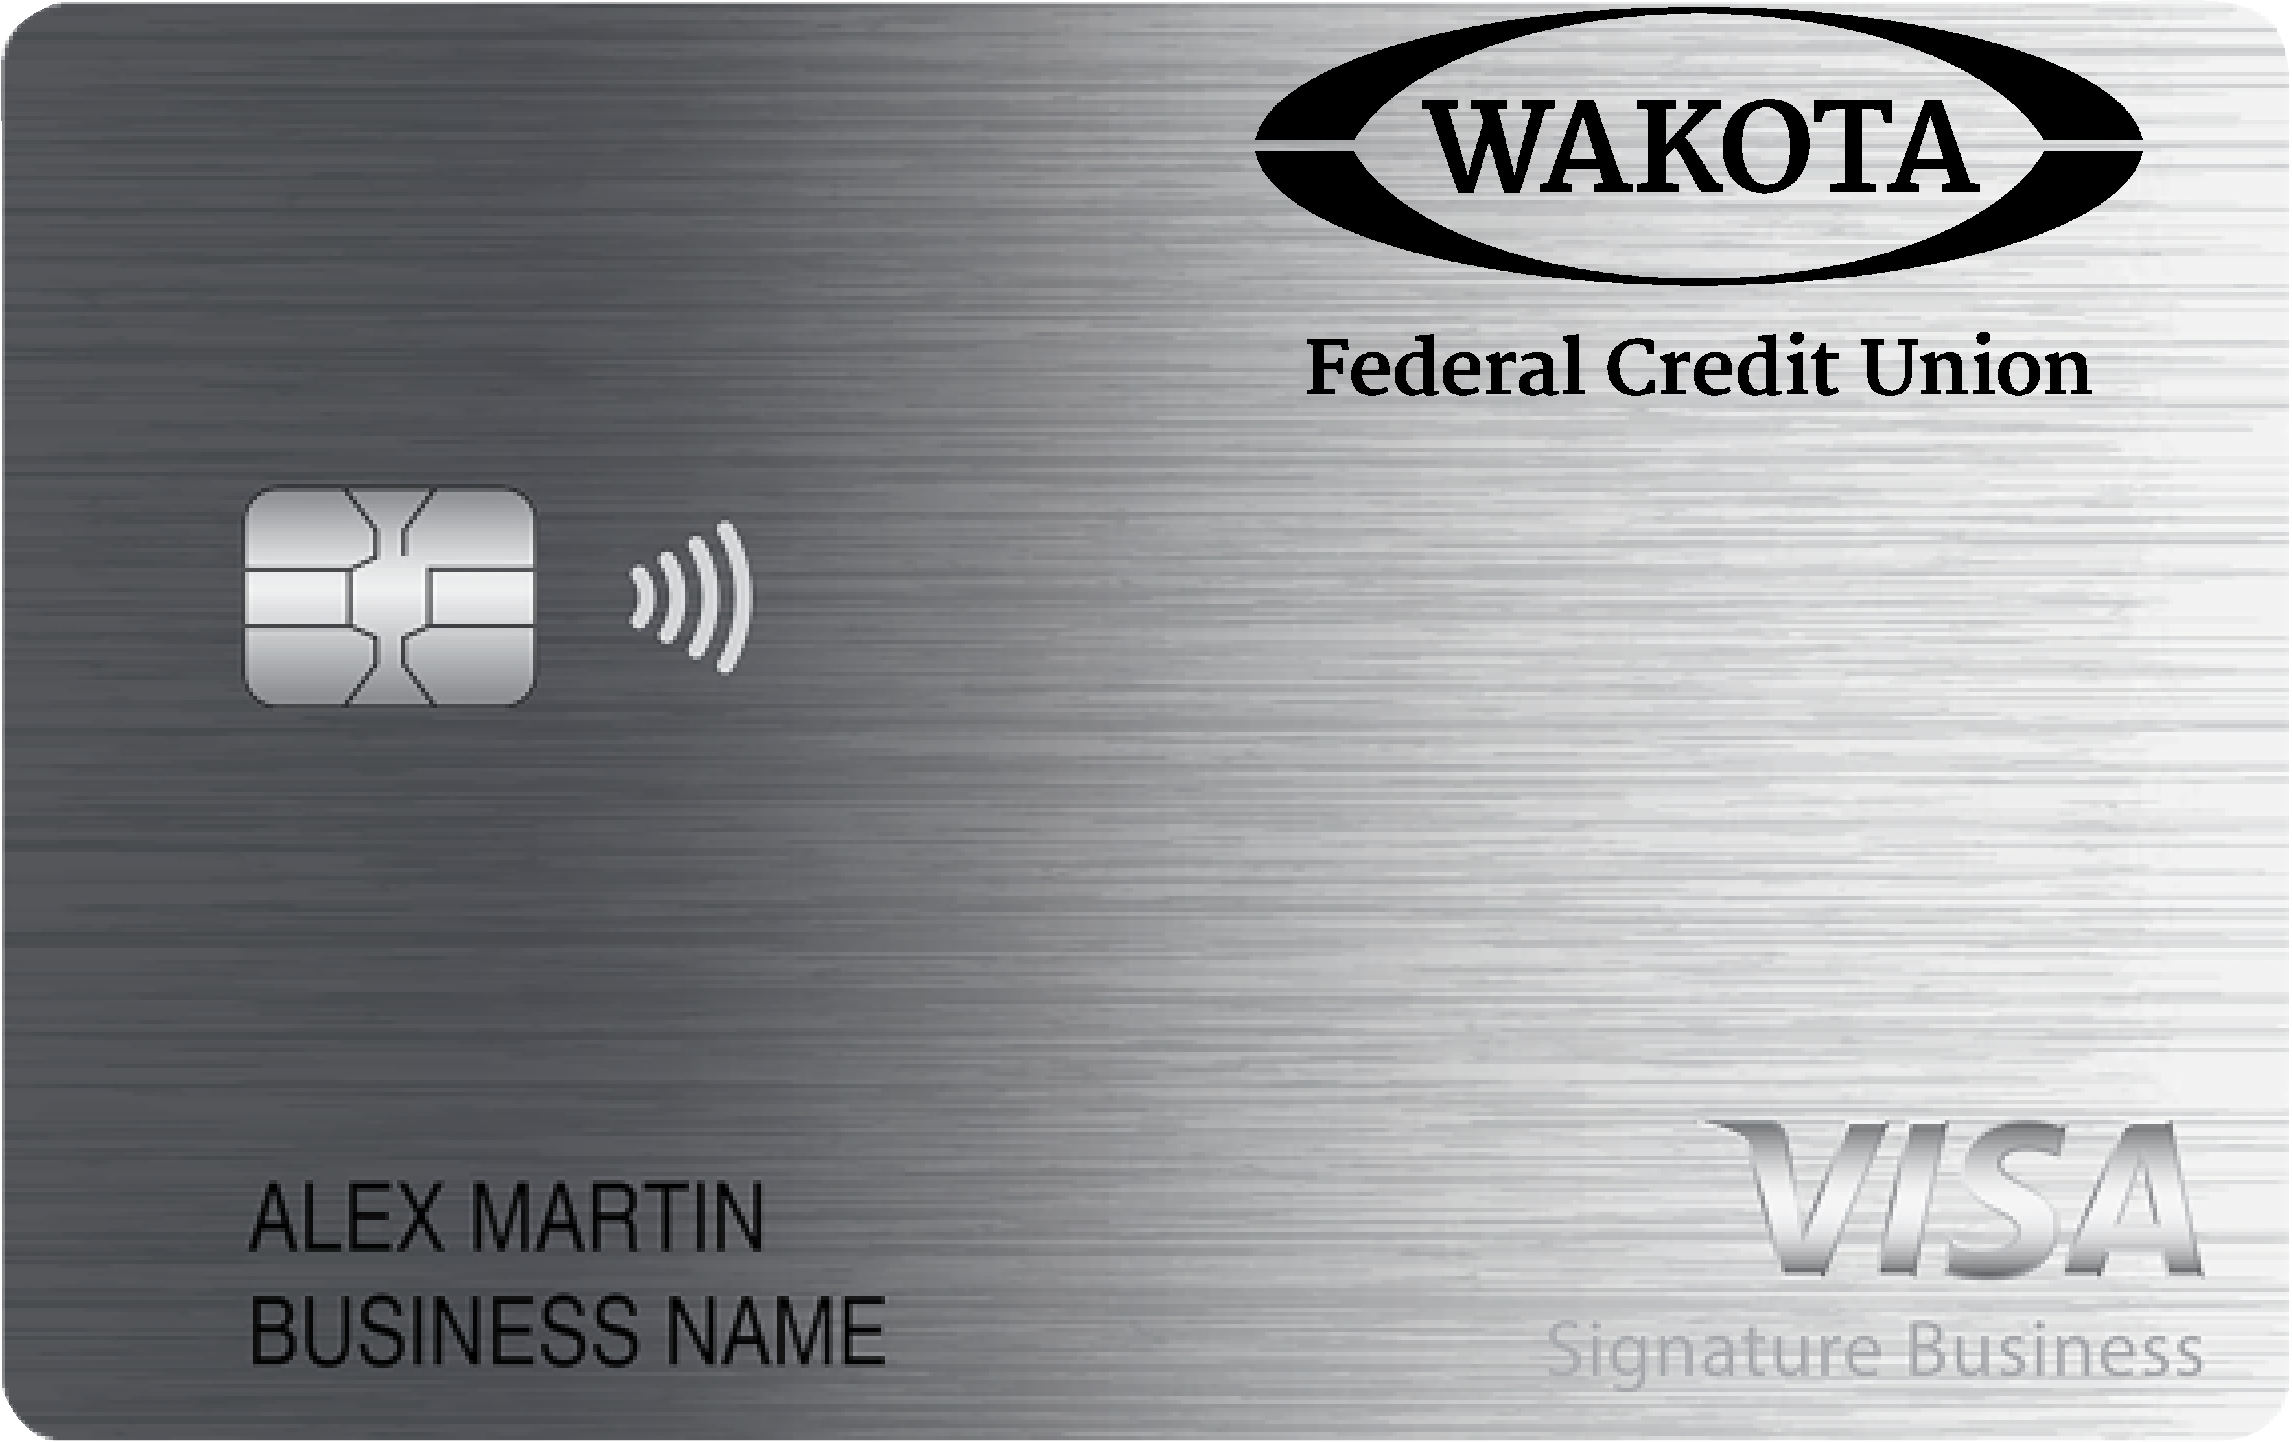 Wakota Federal Credit Union Smart Business Rewards Card